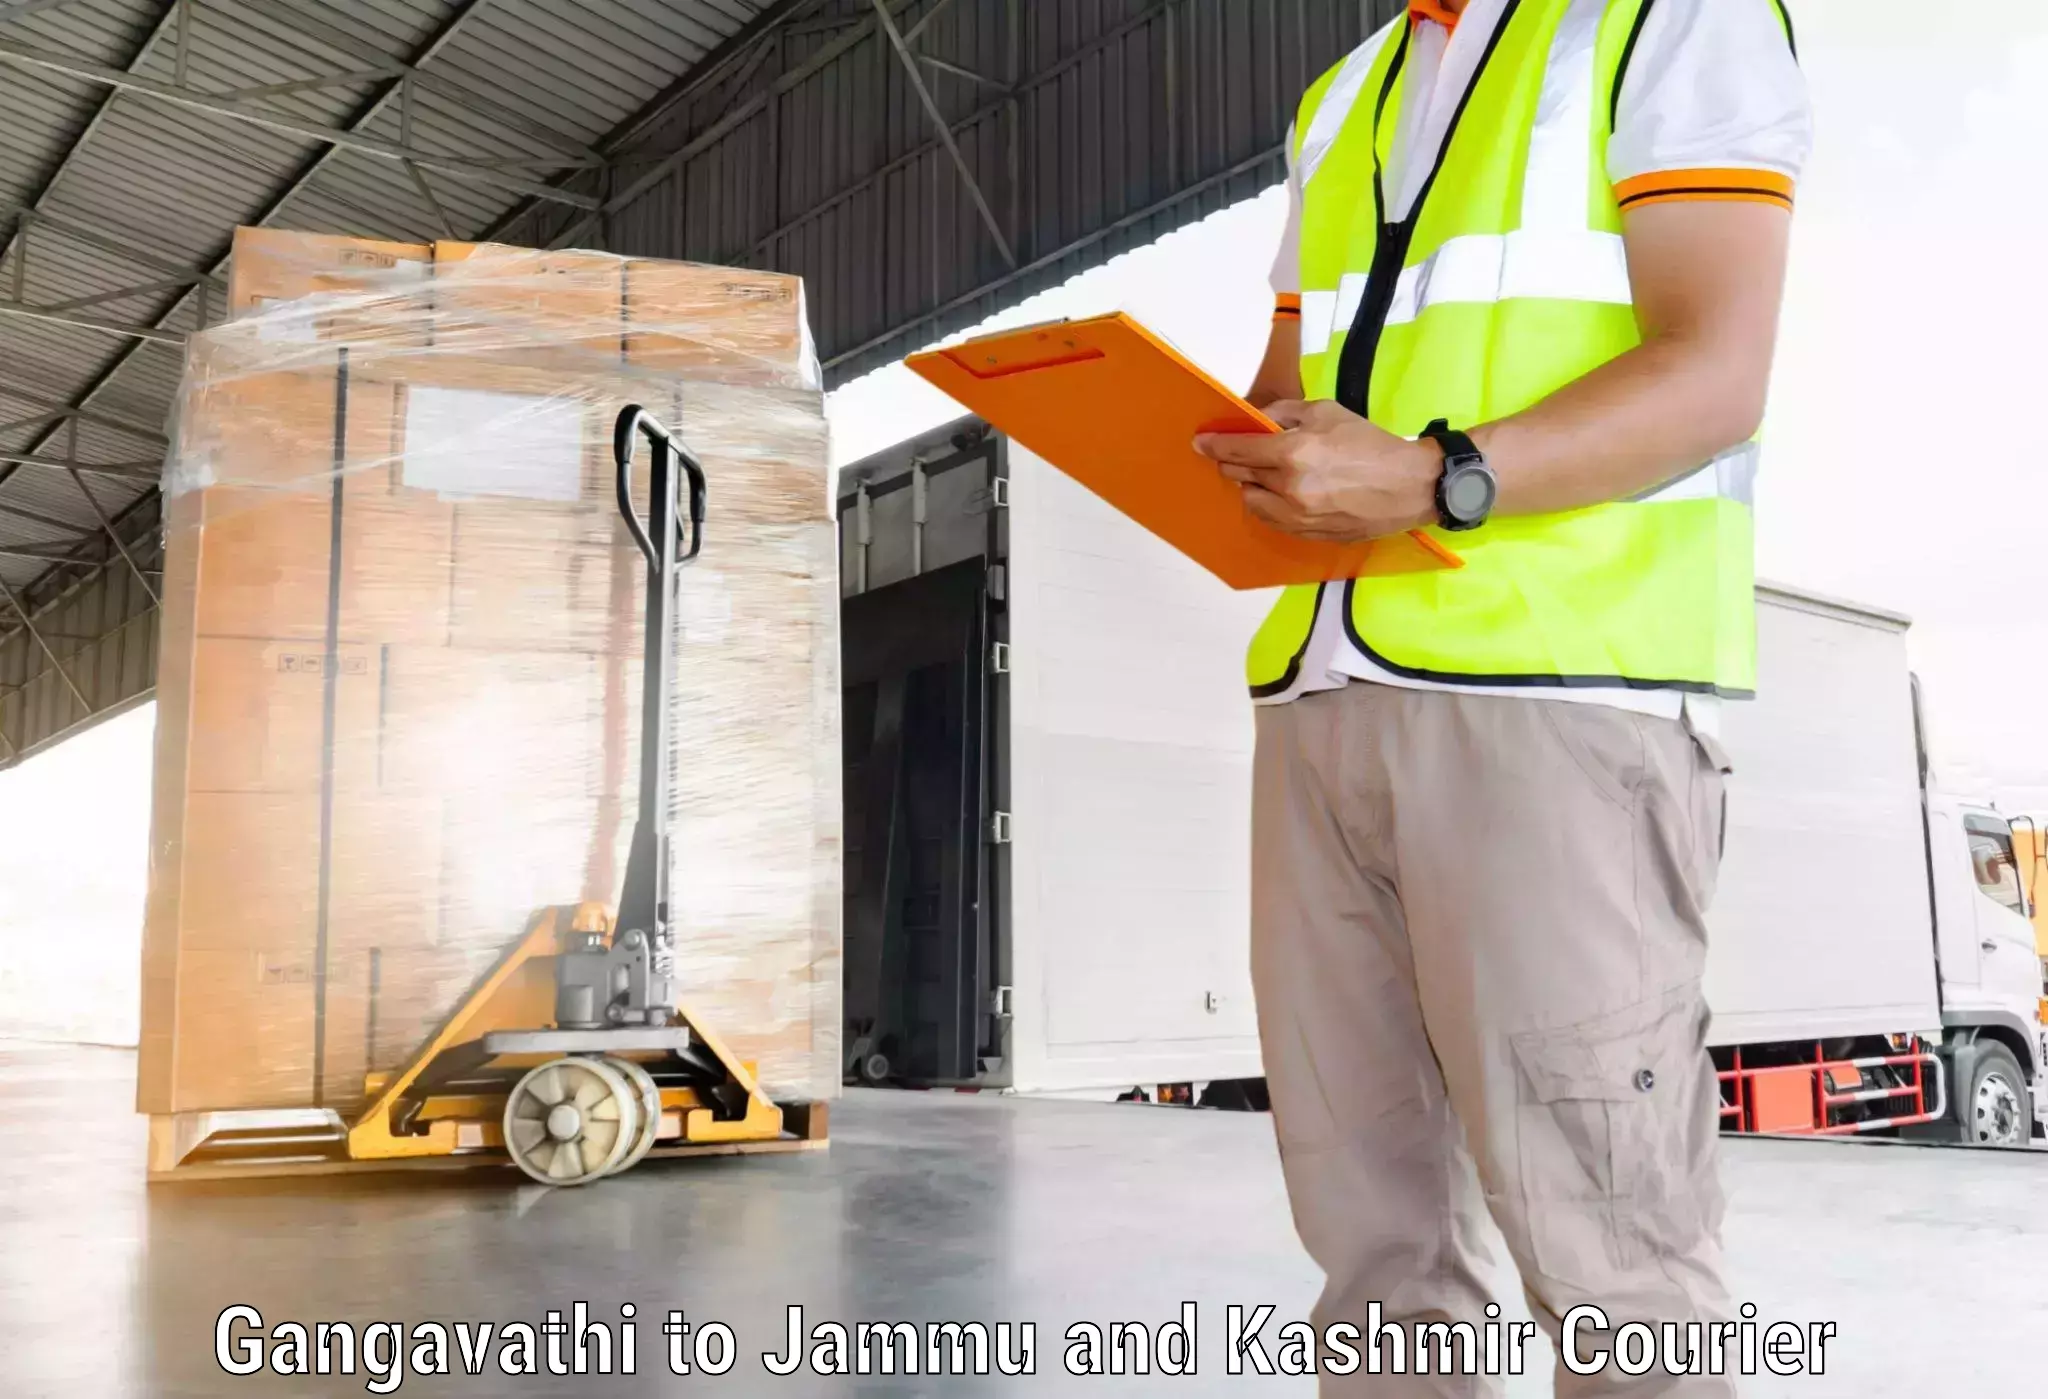 State-of-the-art courier technology Gangavathi to University of Jammu